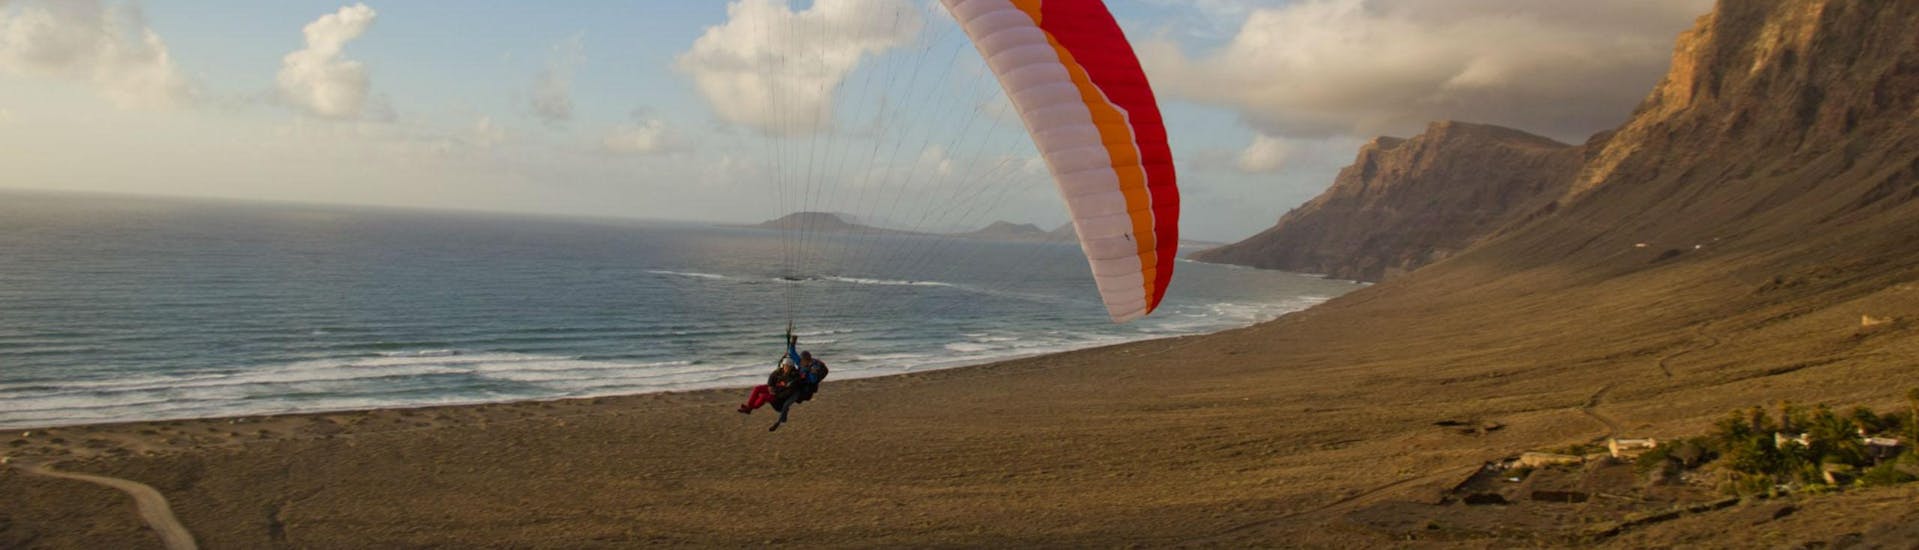 Tandem Paragliding in Lanzarote - Discovery.